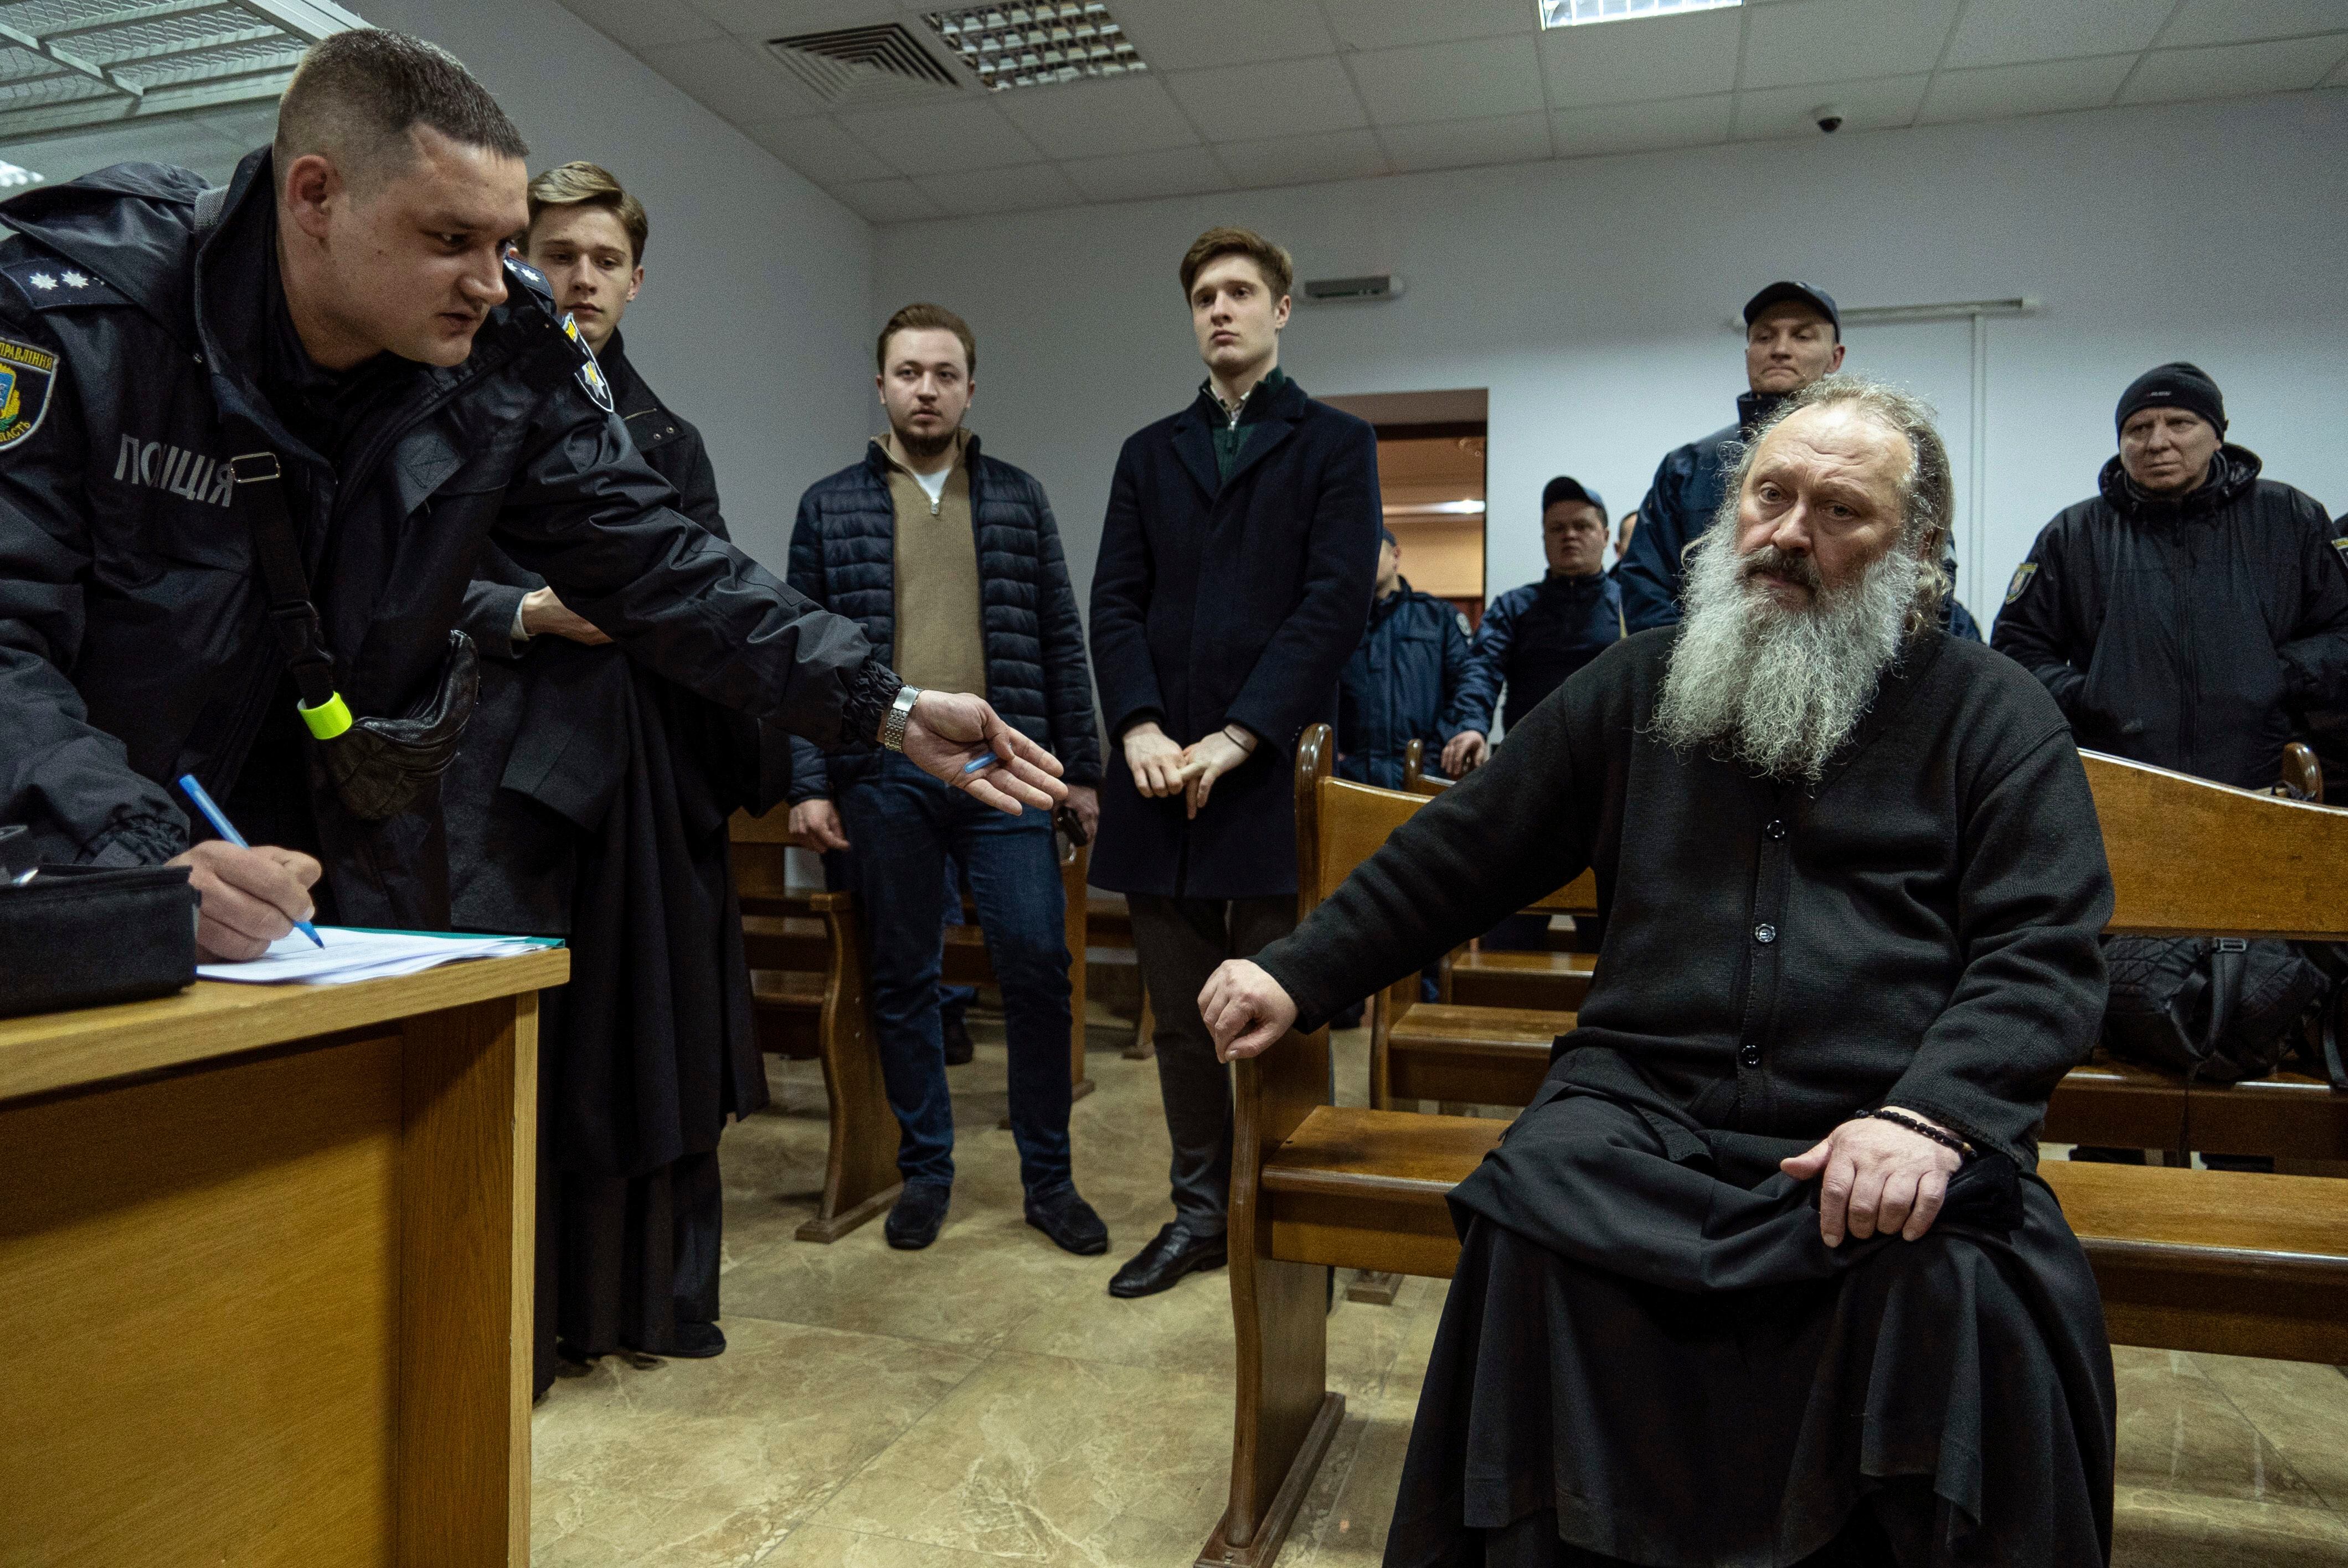 Ukrainian court puts an Orthodox leader under house arrest